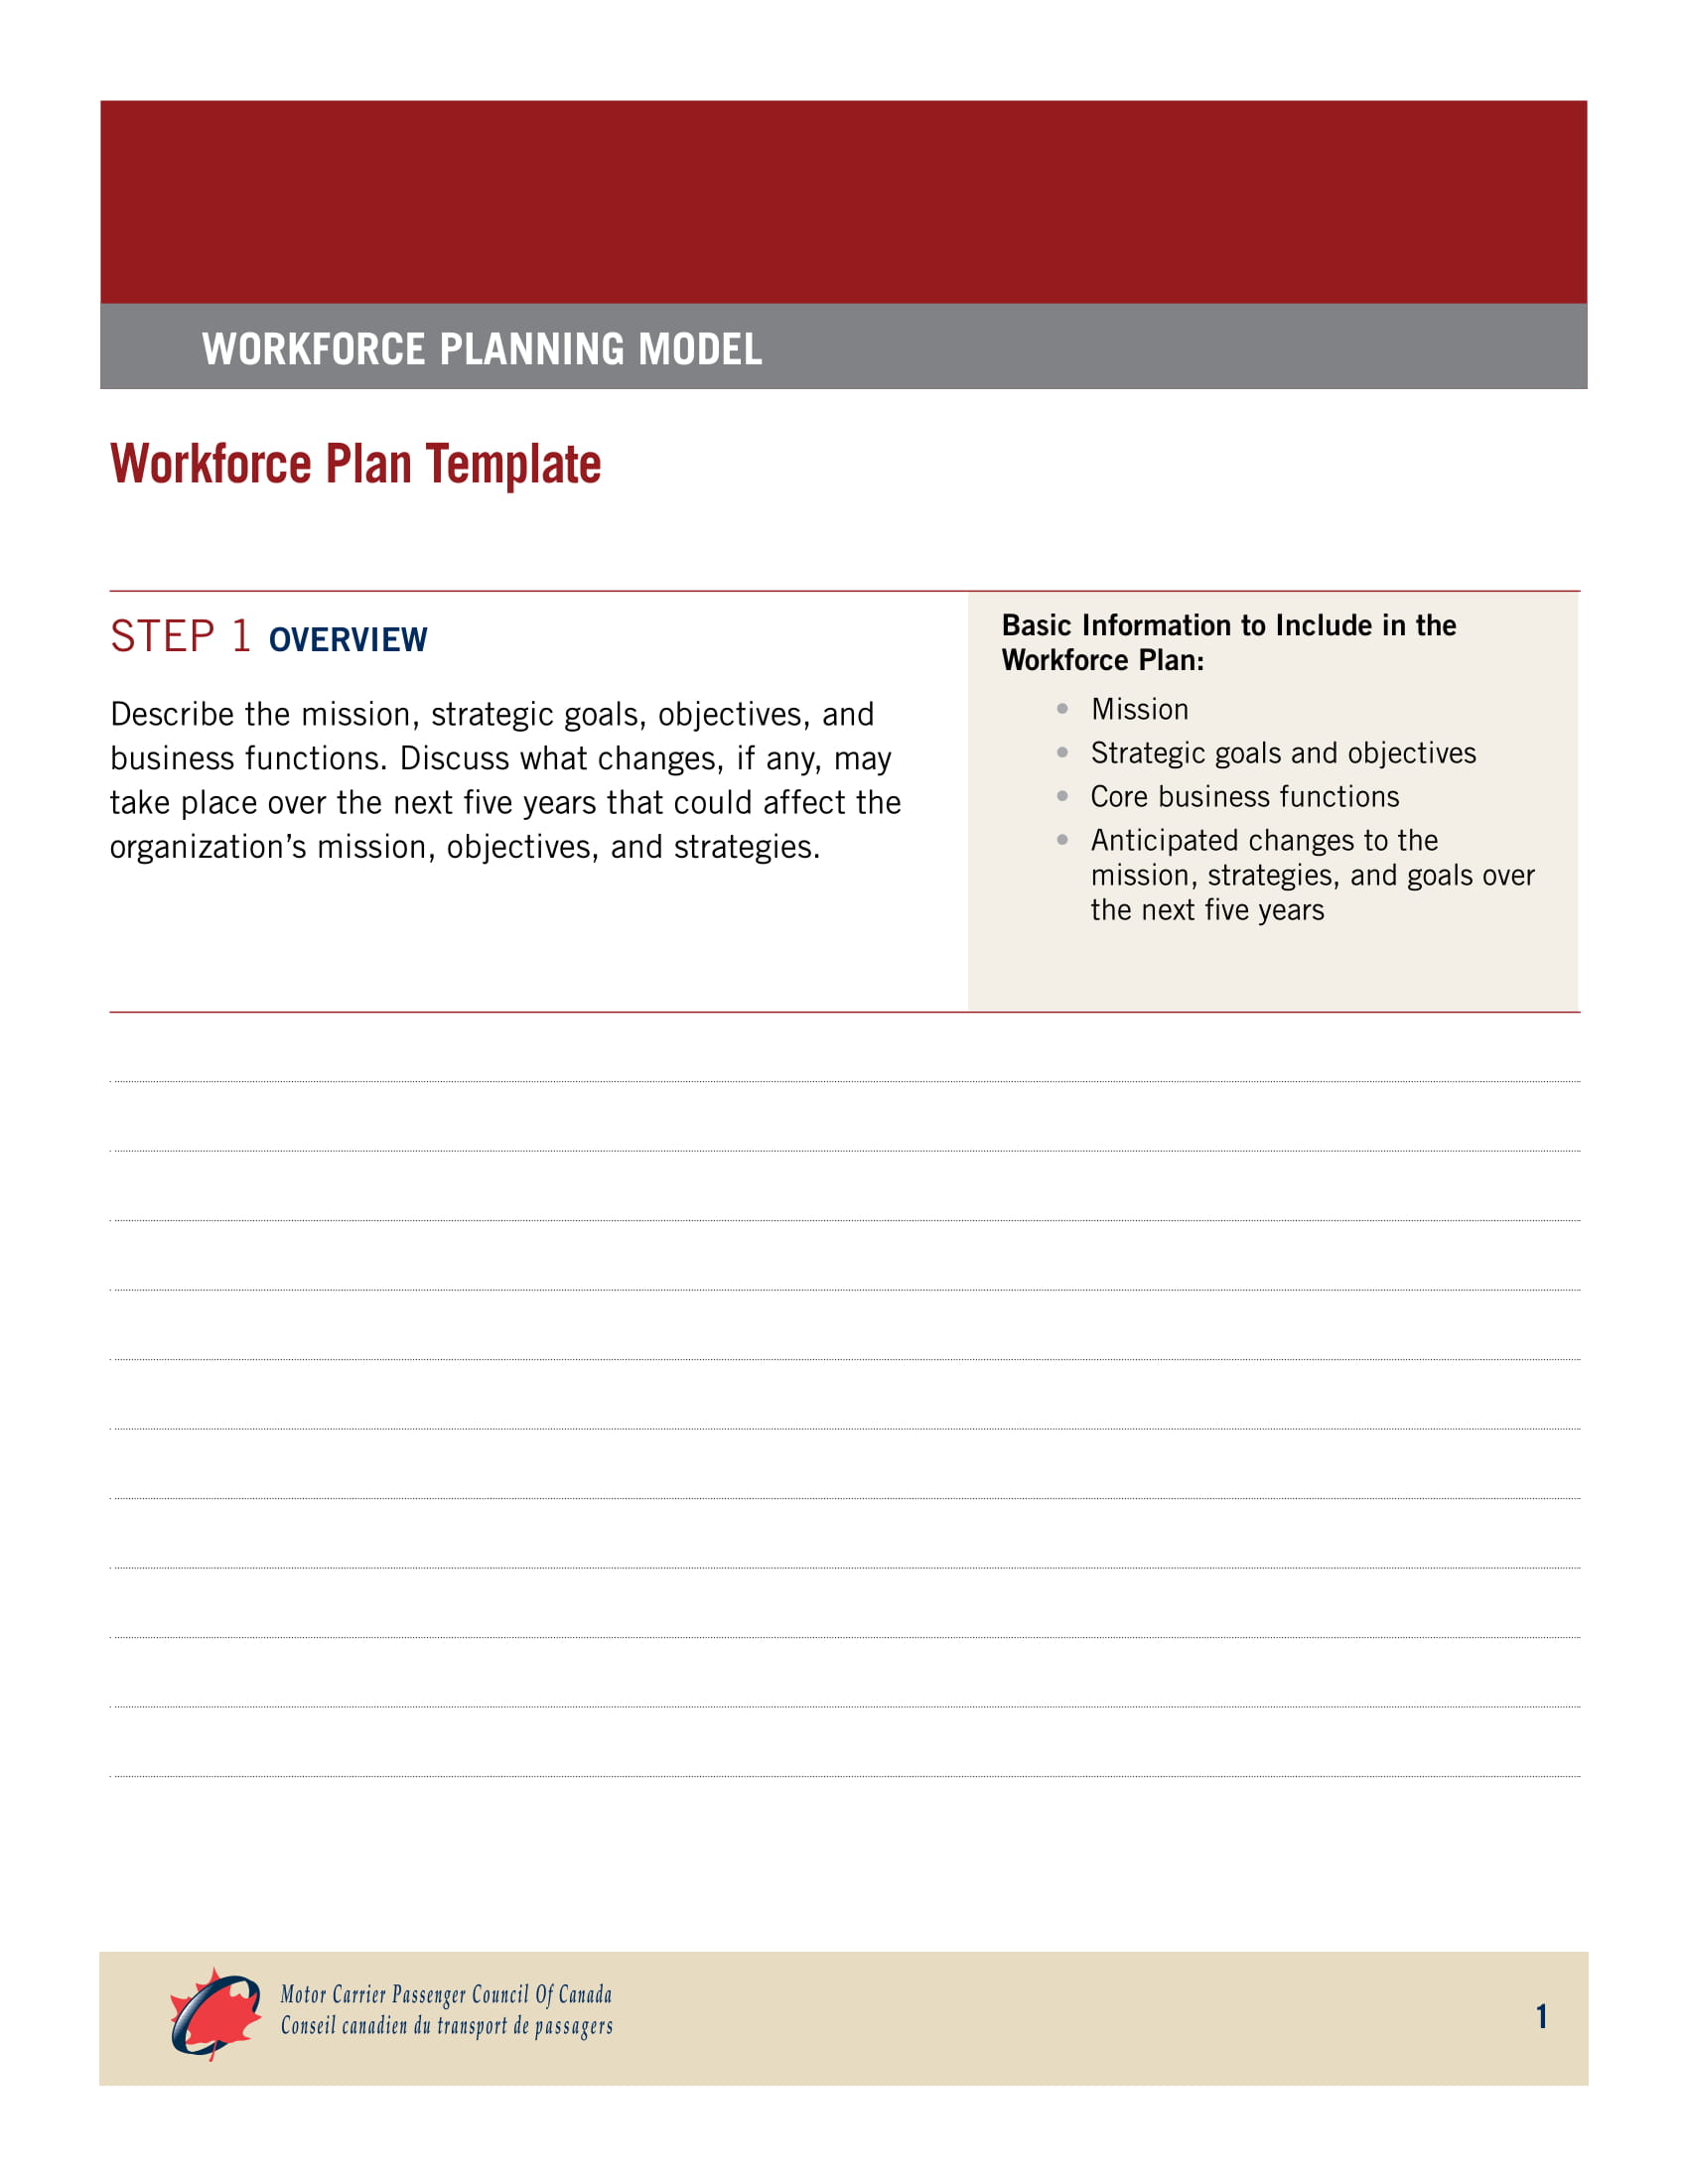 workforce plan template example